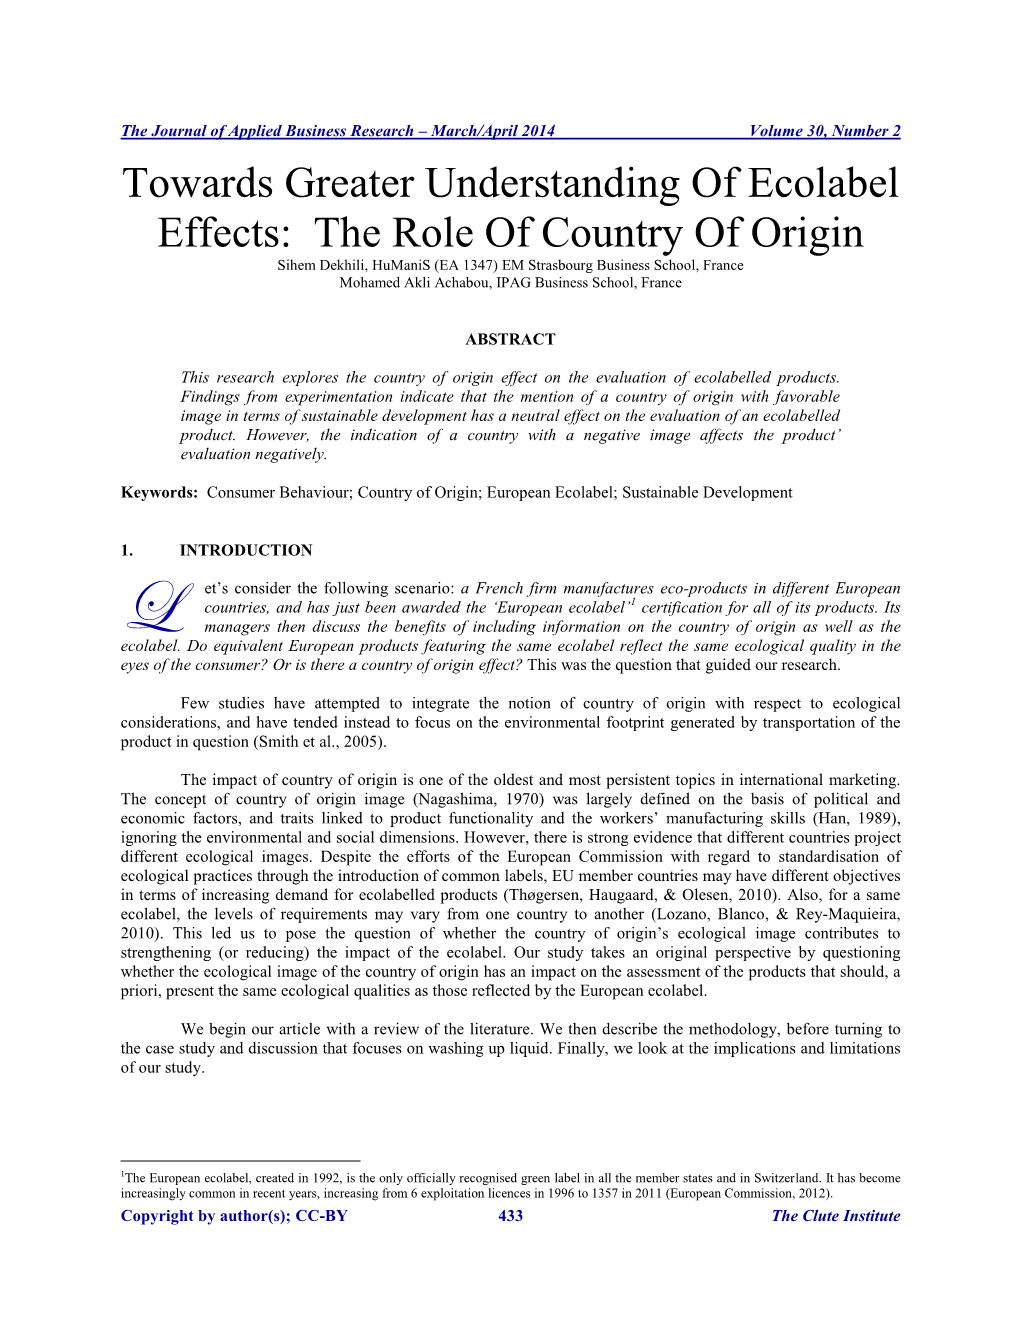 Towards Greater Understanding of Ecolabel Effects